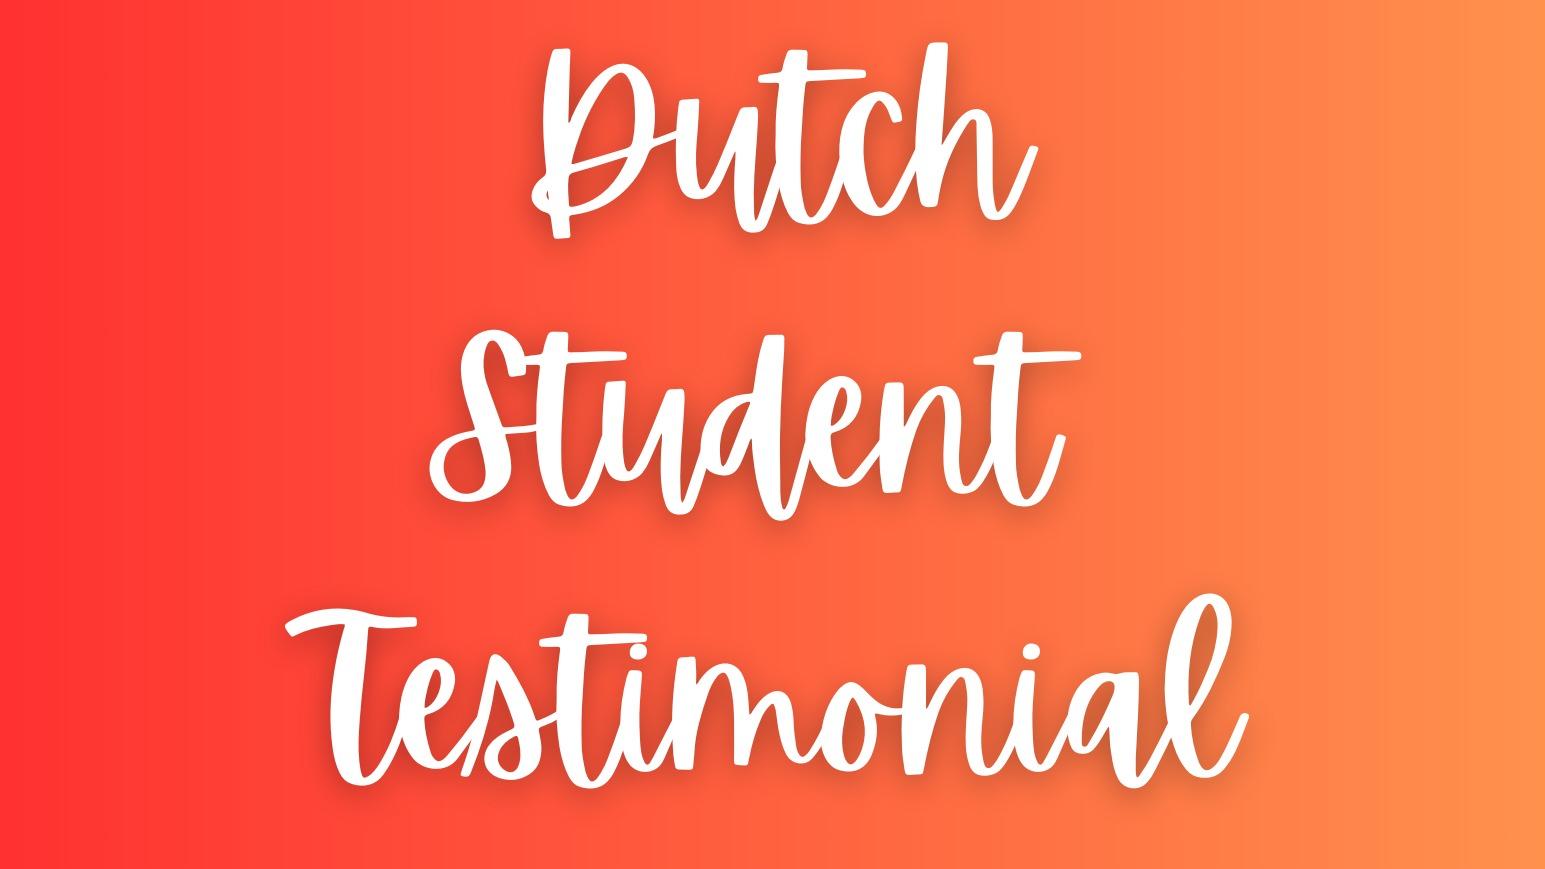 Dutch Student Testimonial